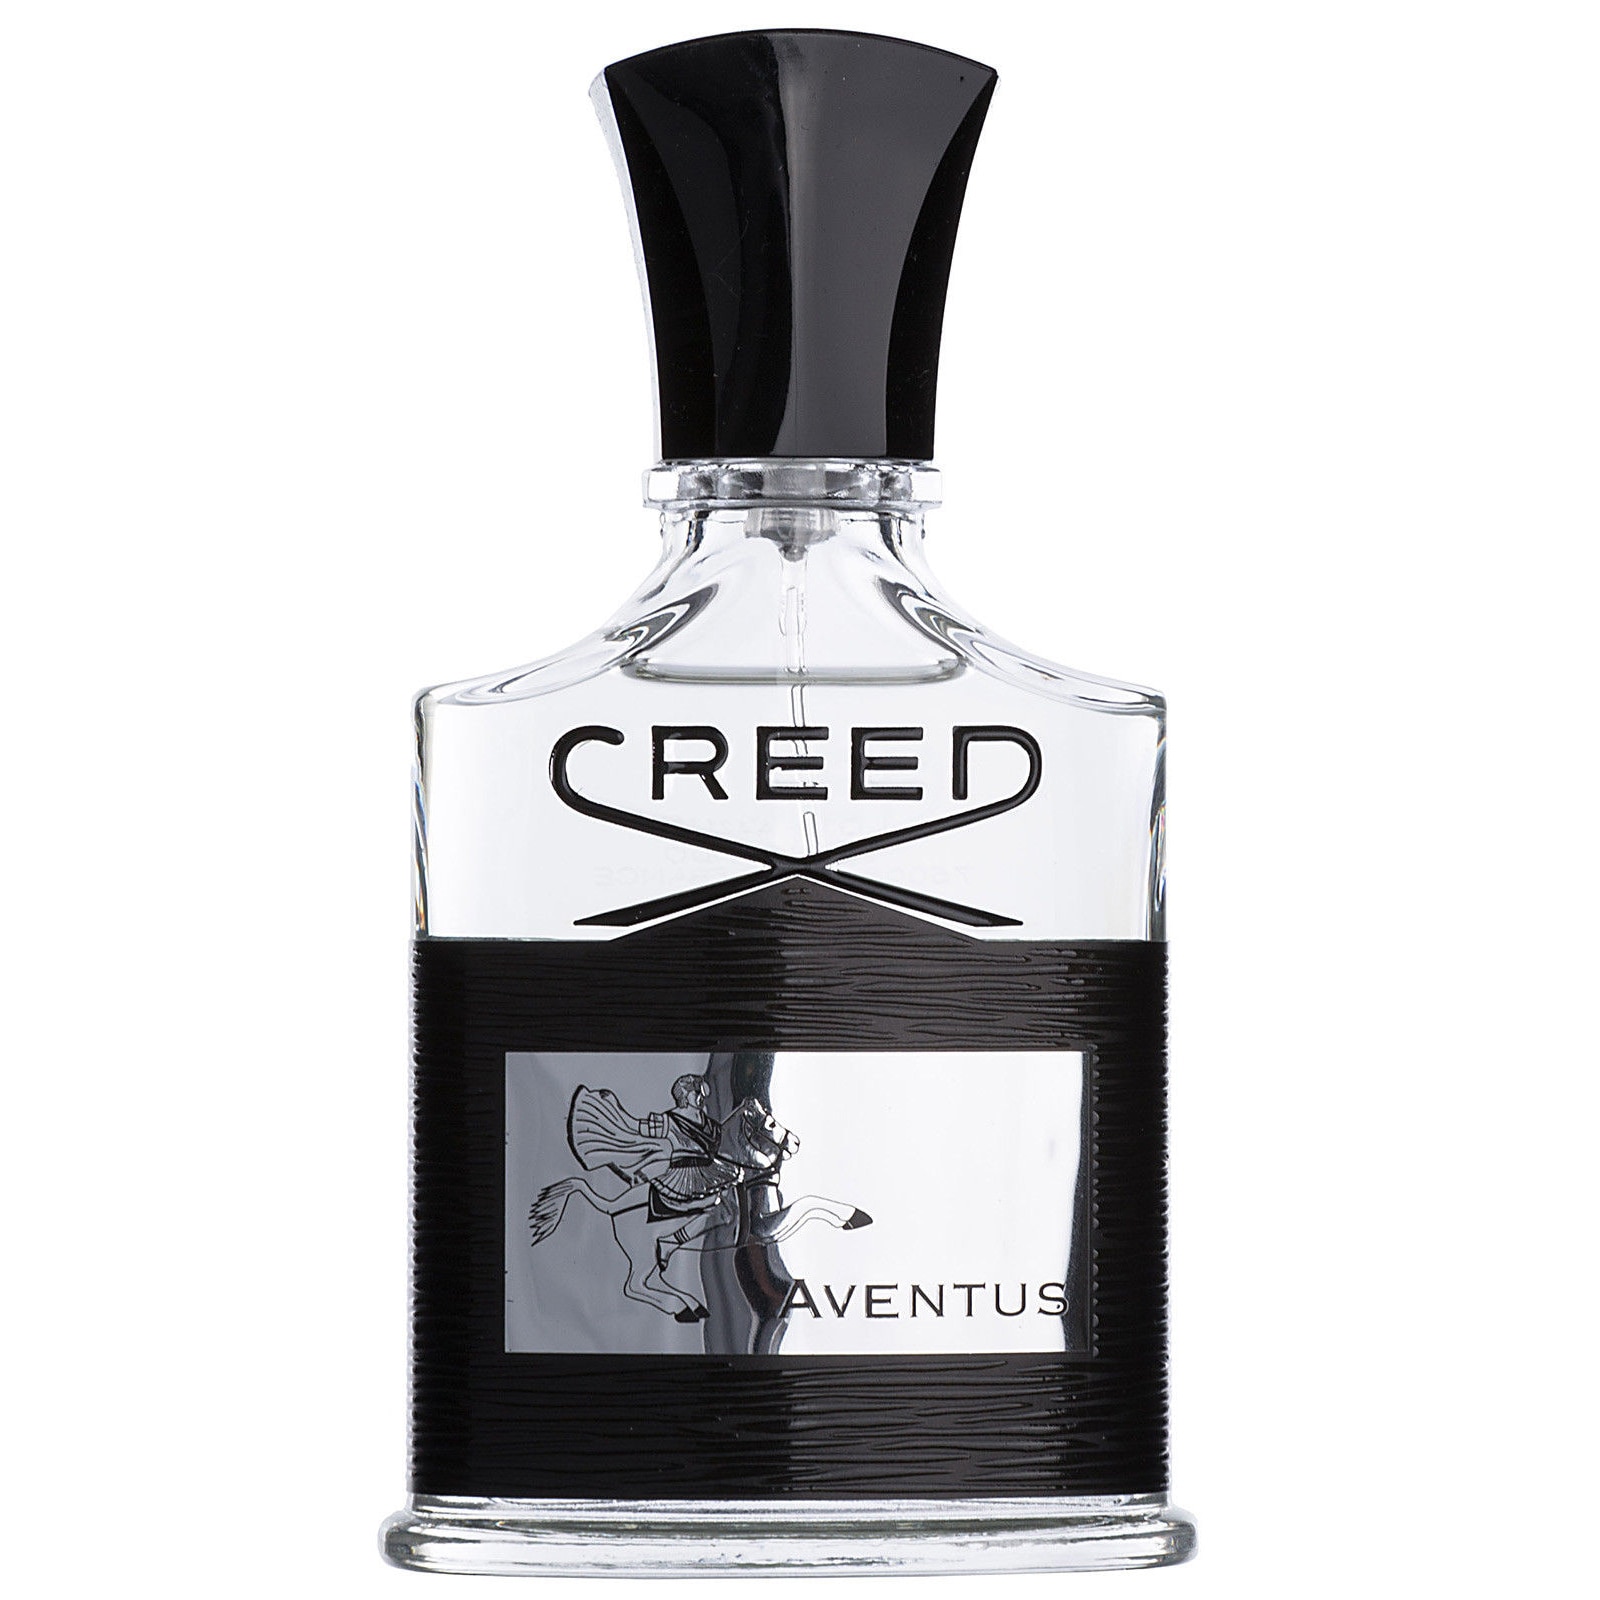 Creed aventus духи мужские